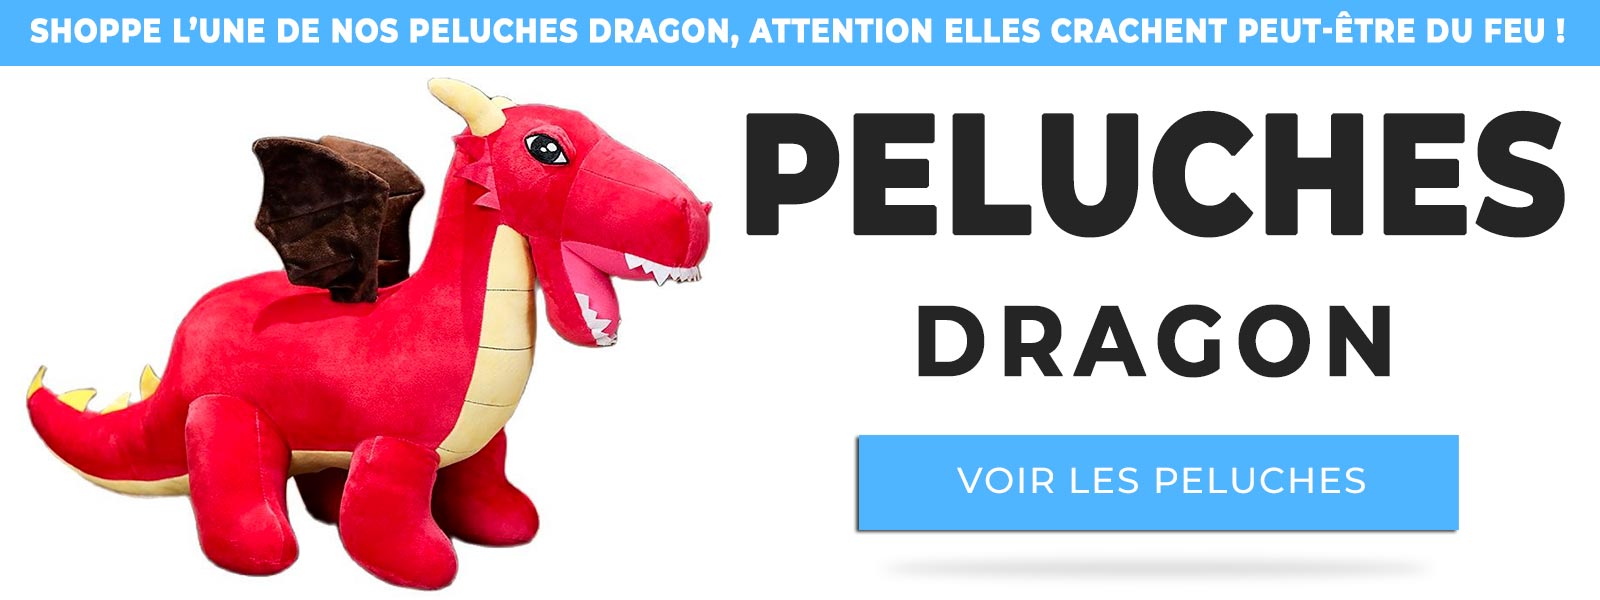 Peluches dragon